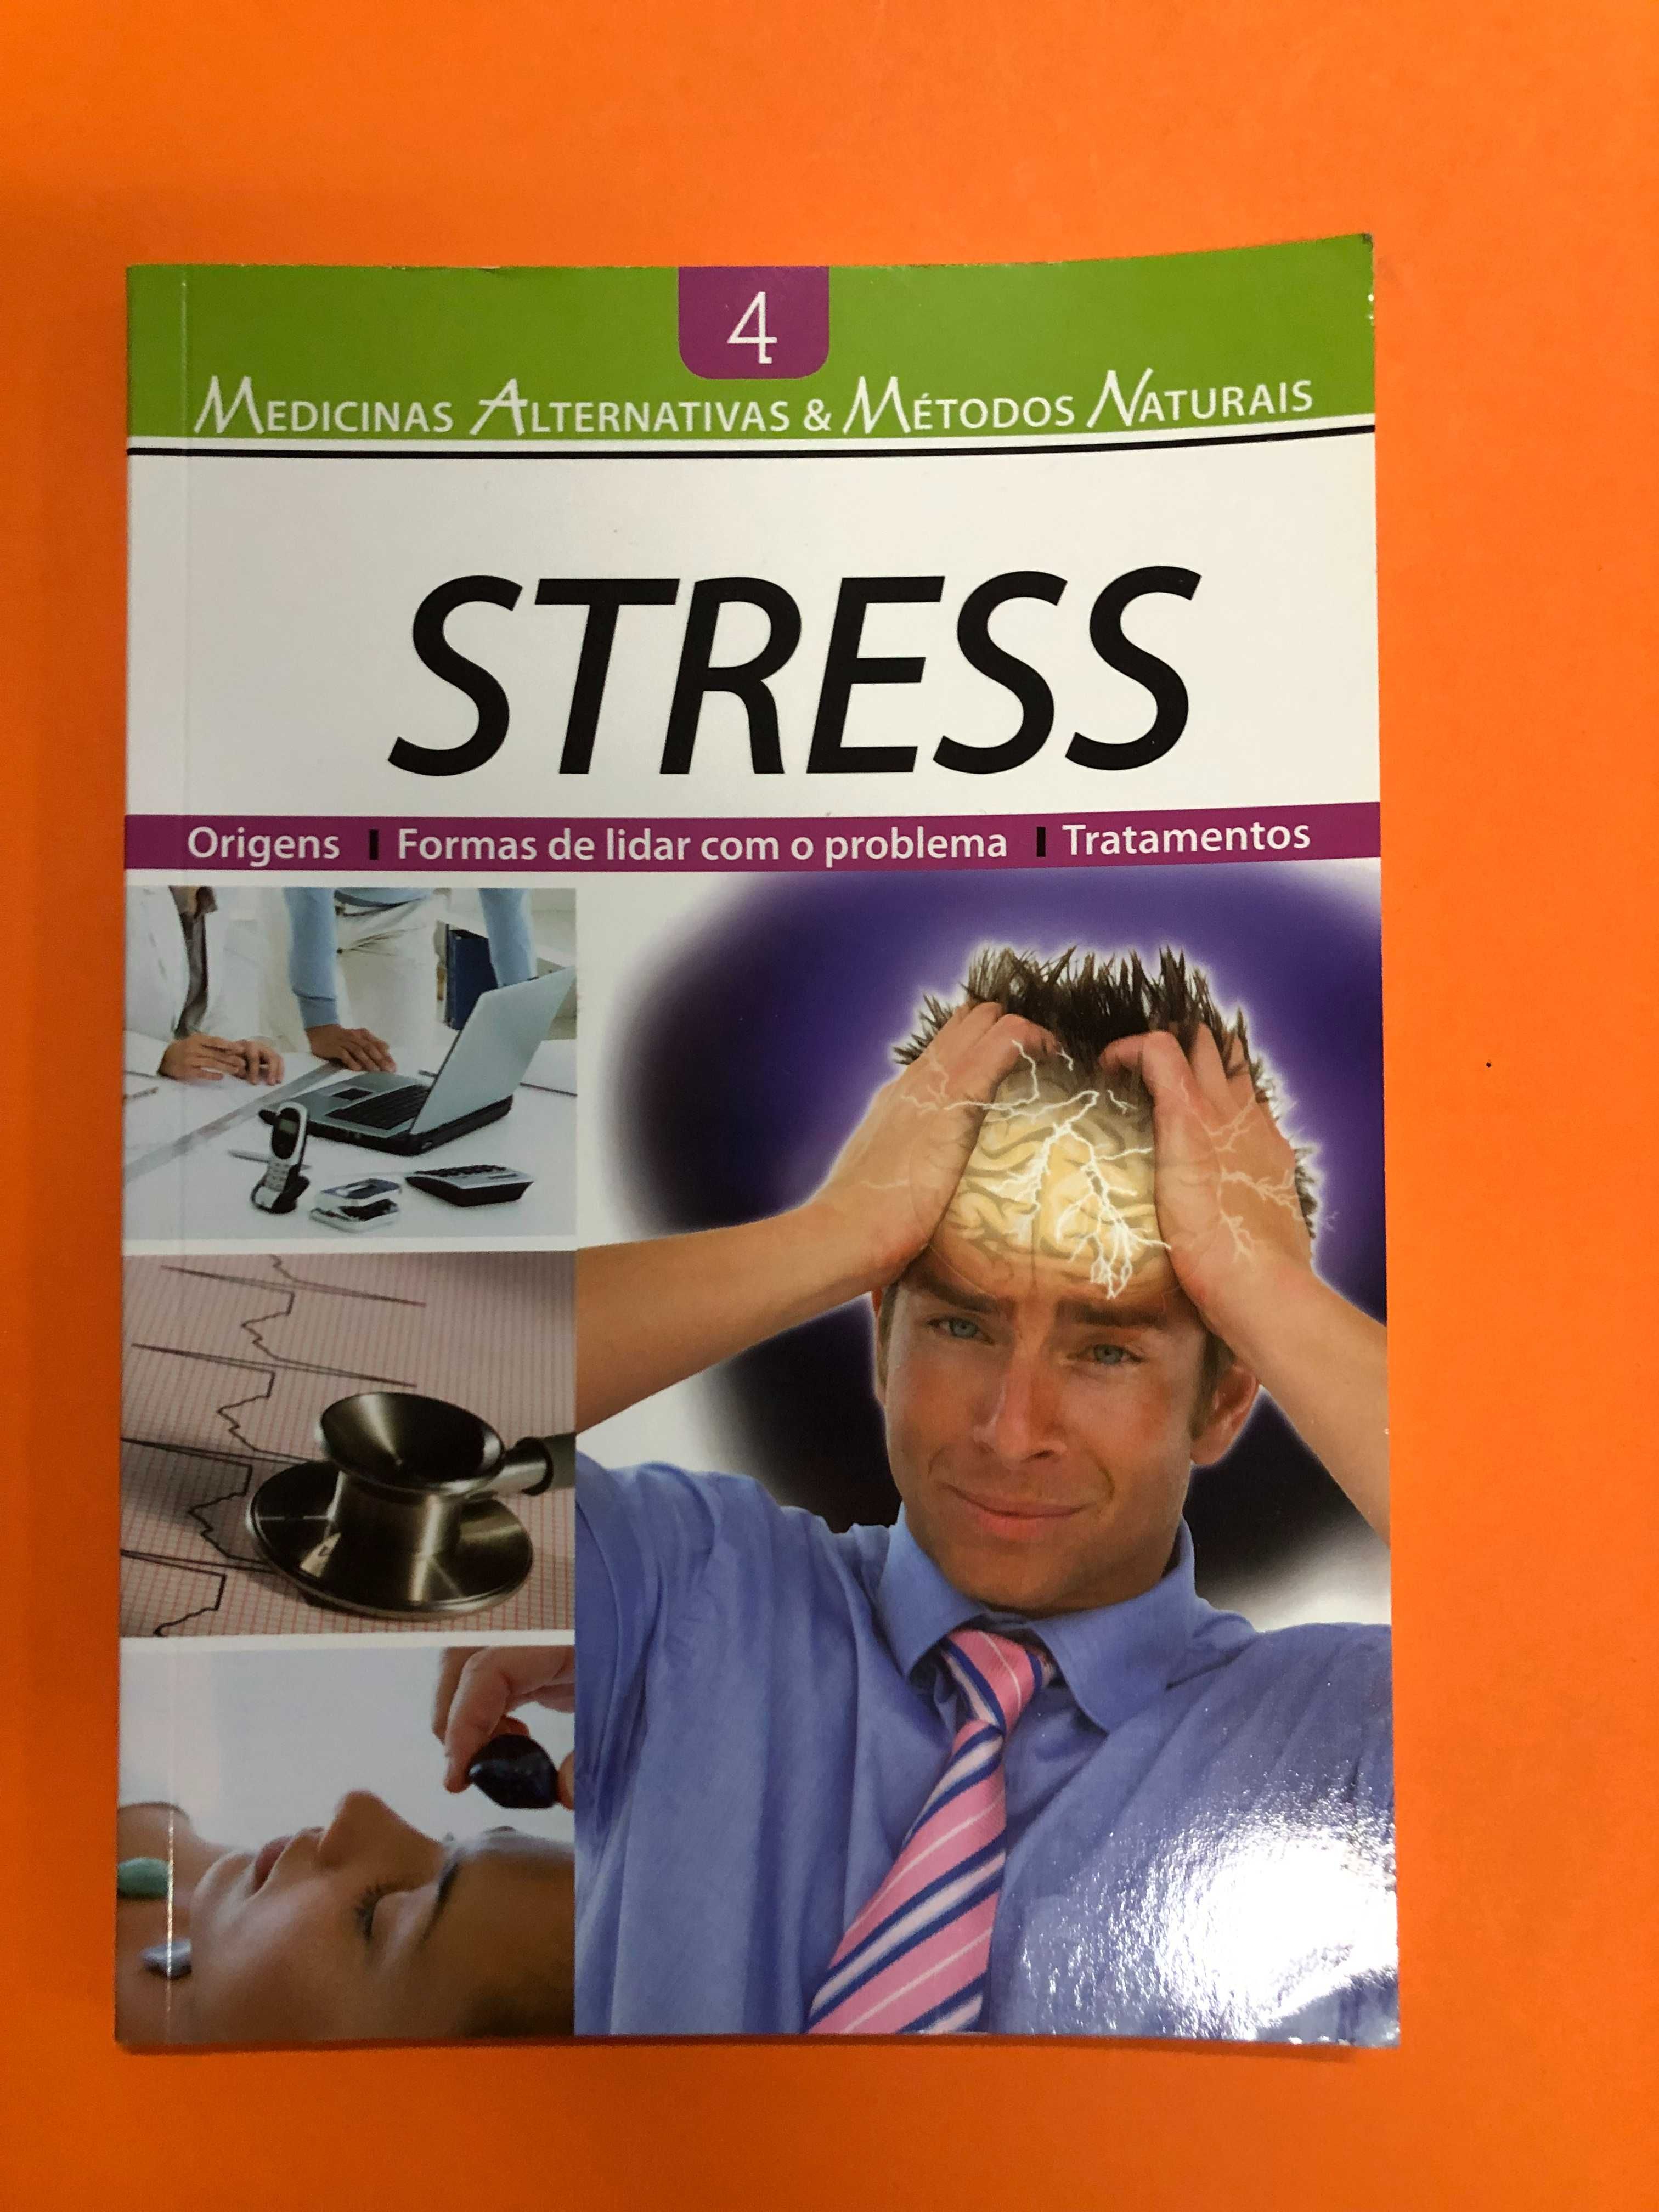 Medicinas alternativas & métodos naturais - Stress